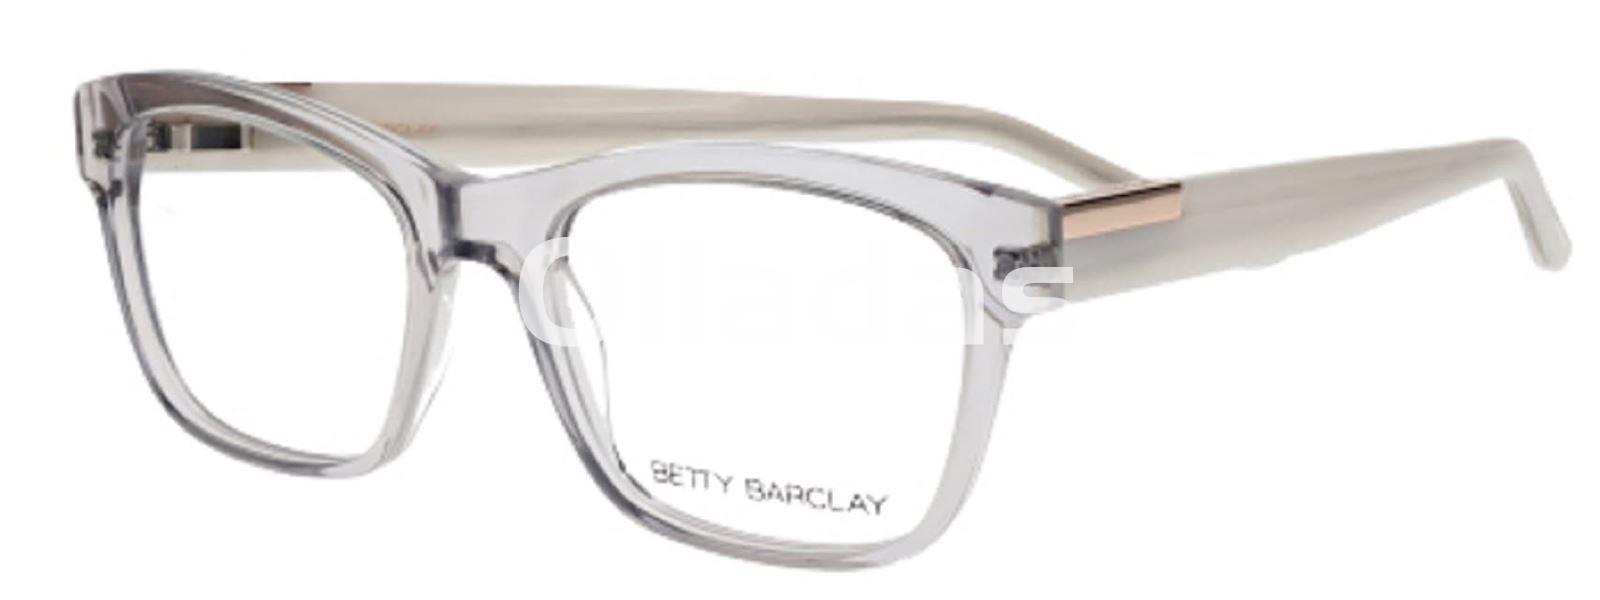 Betty Barclay 51225. - Imagen 1